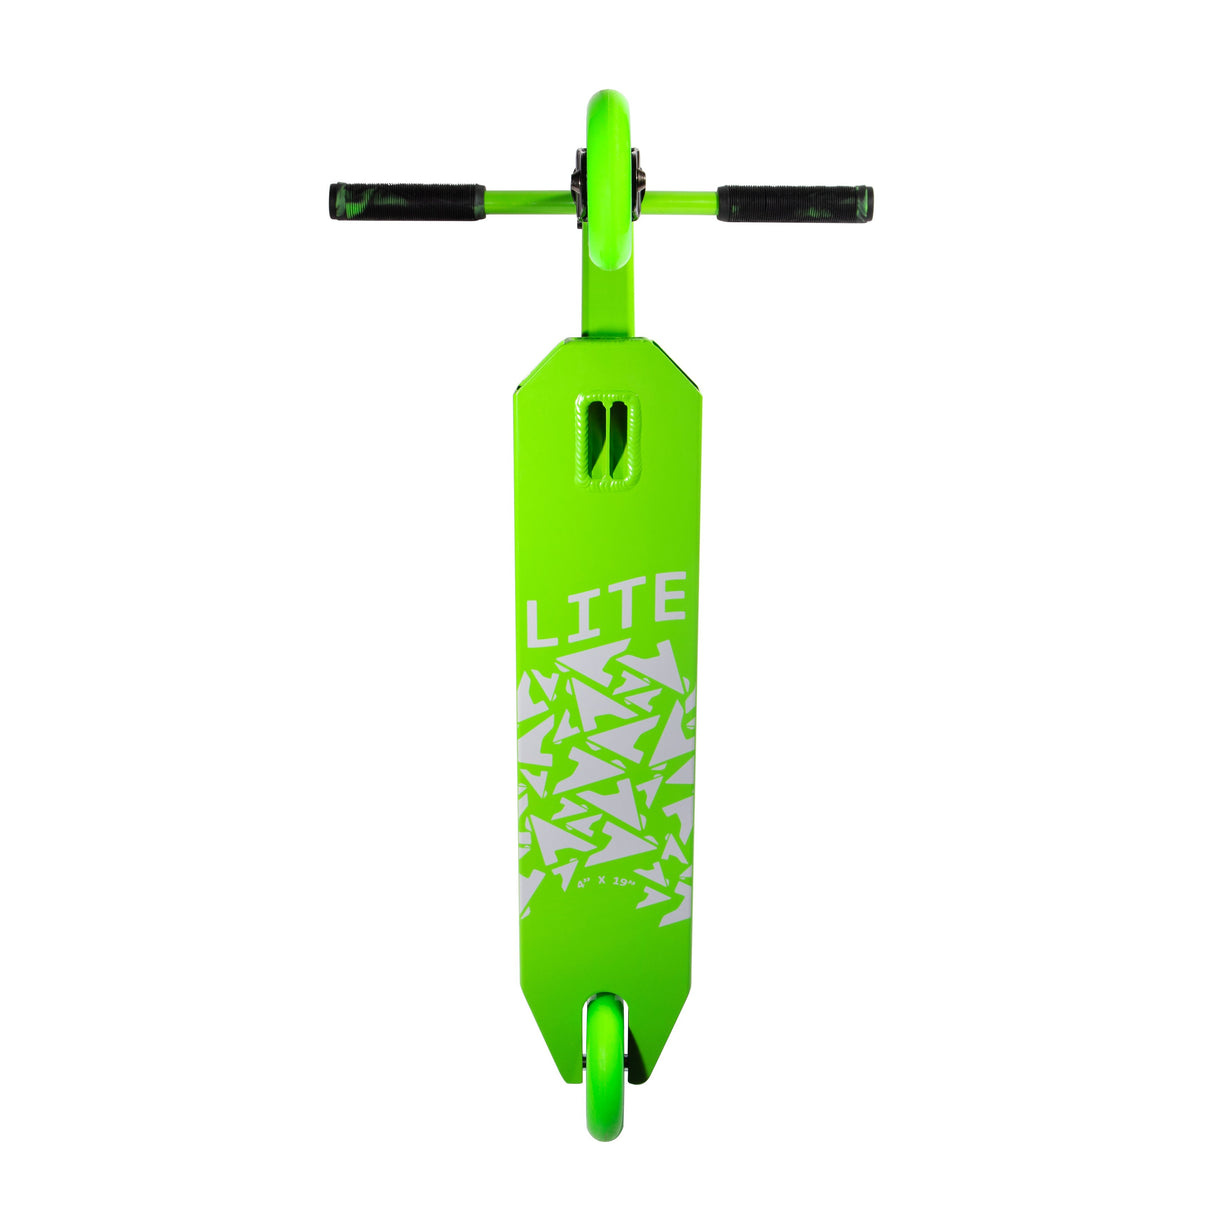 Antics LITE - Complete Pro Scooter